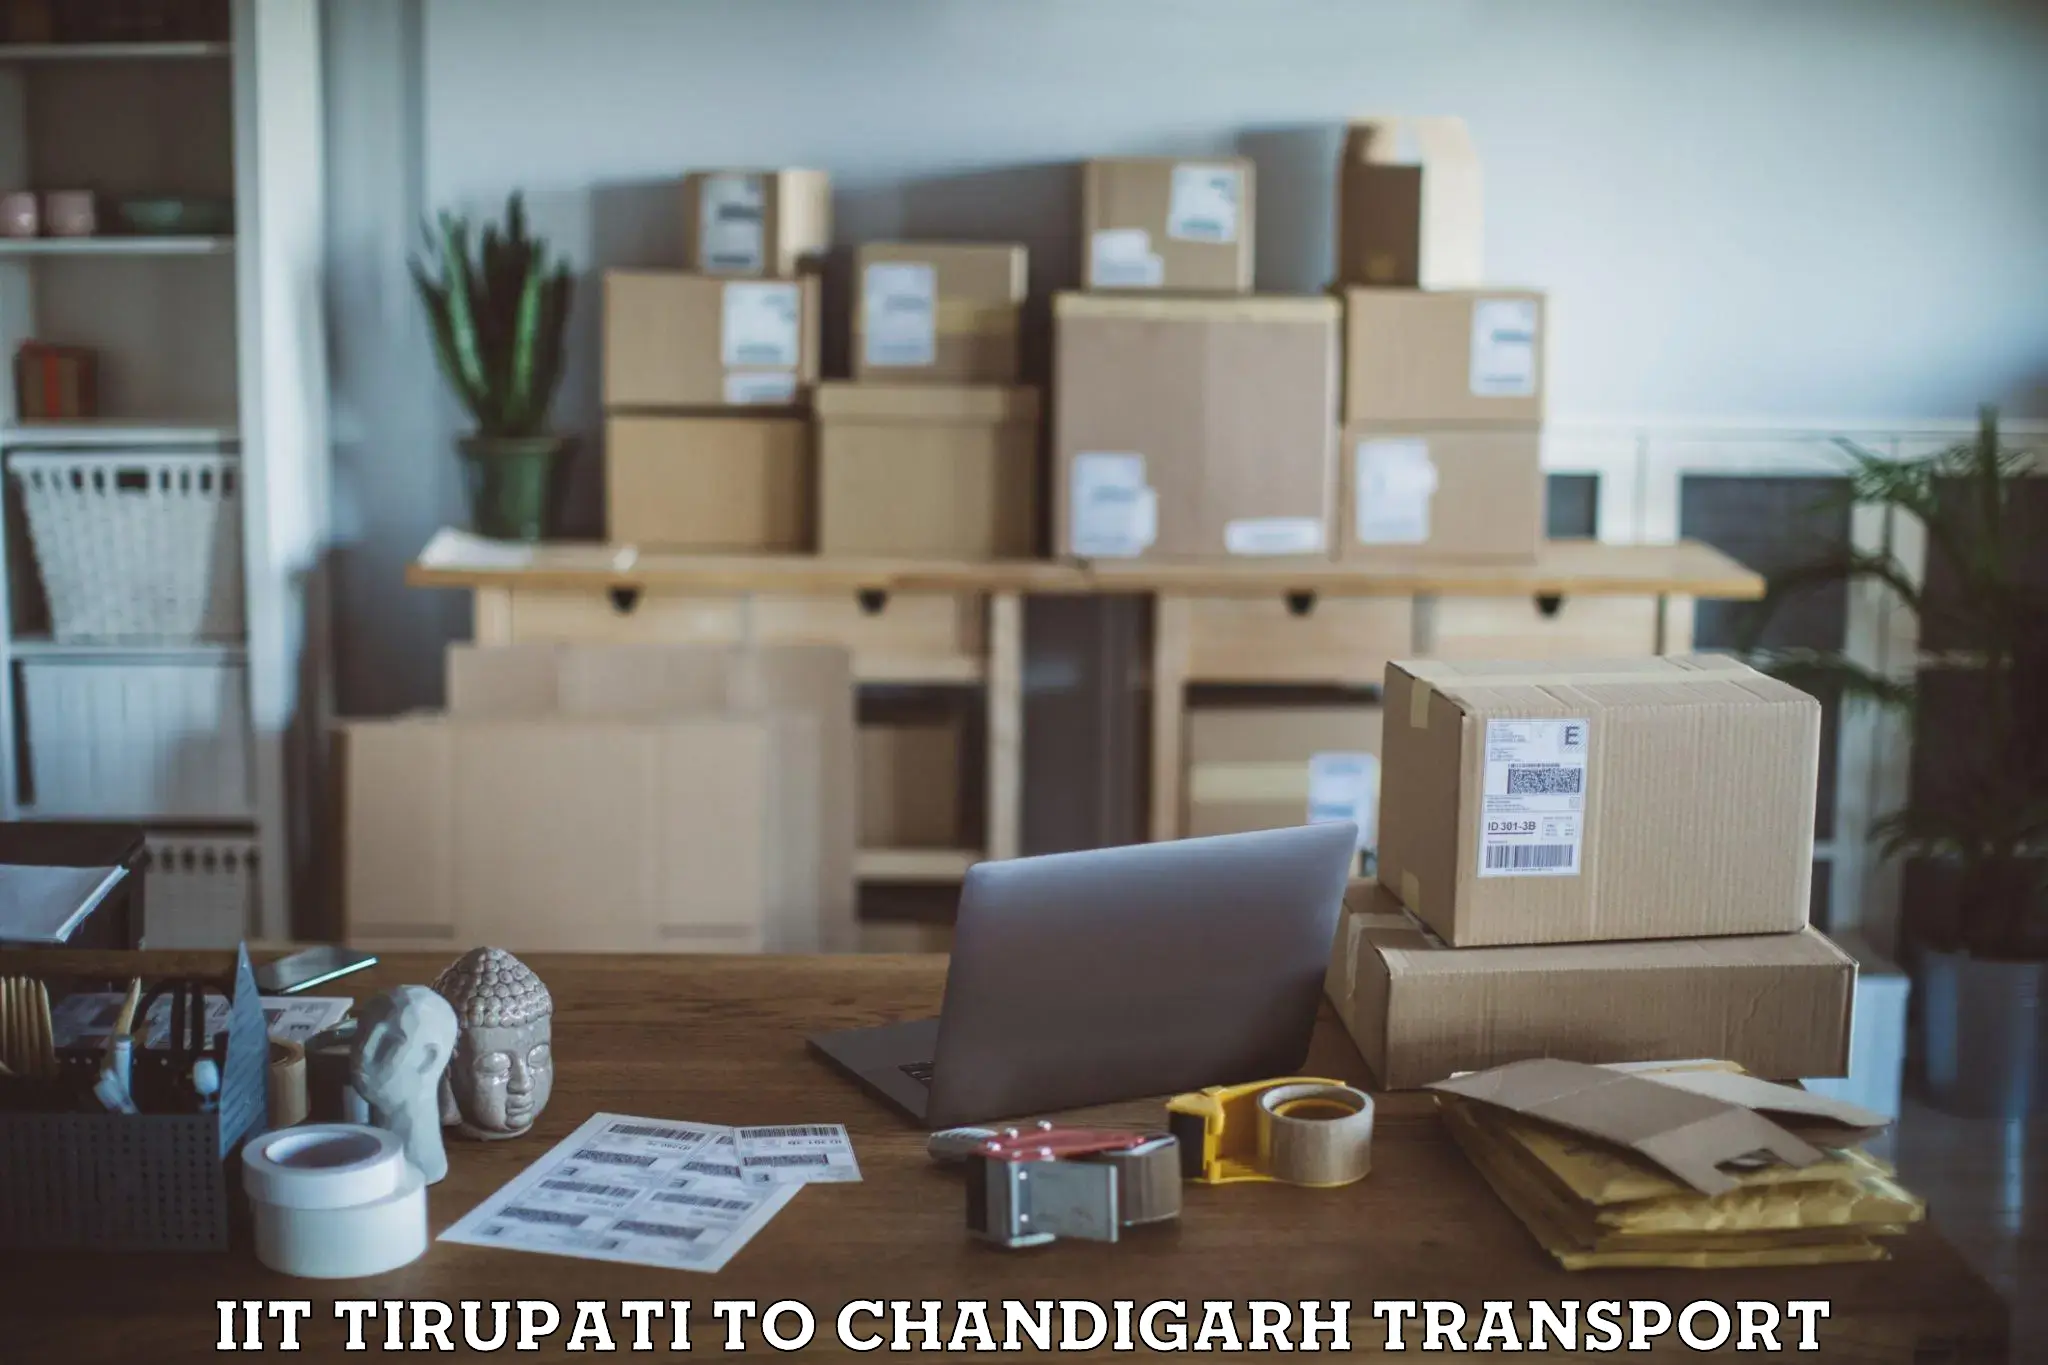 Daily parcel service transport IIT Tirupati to Chandigarh